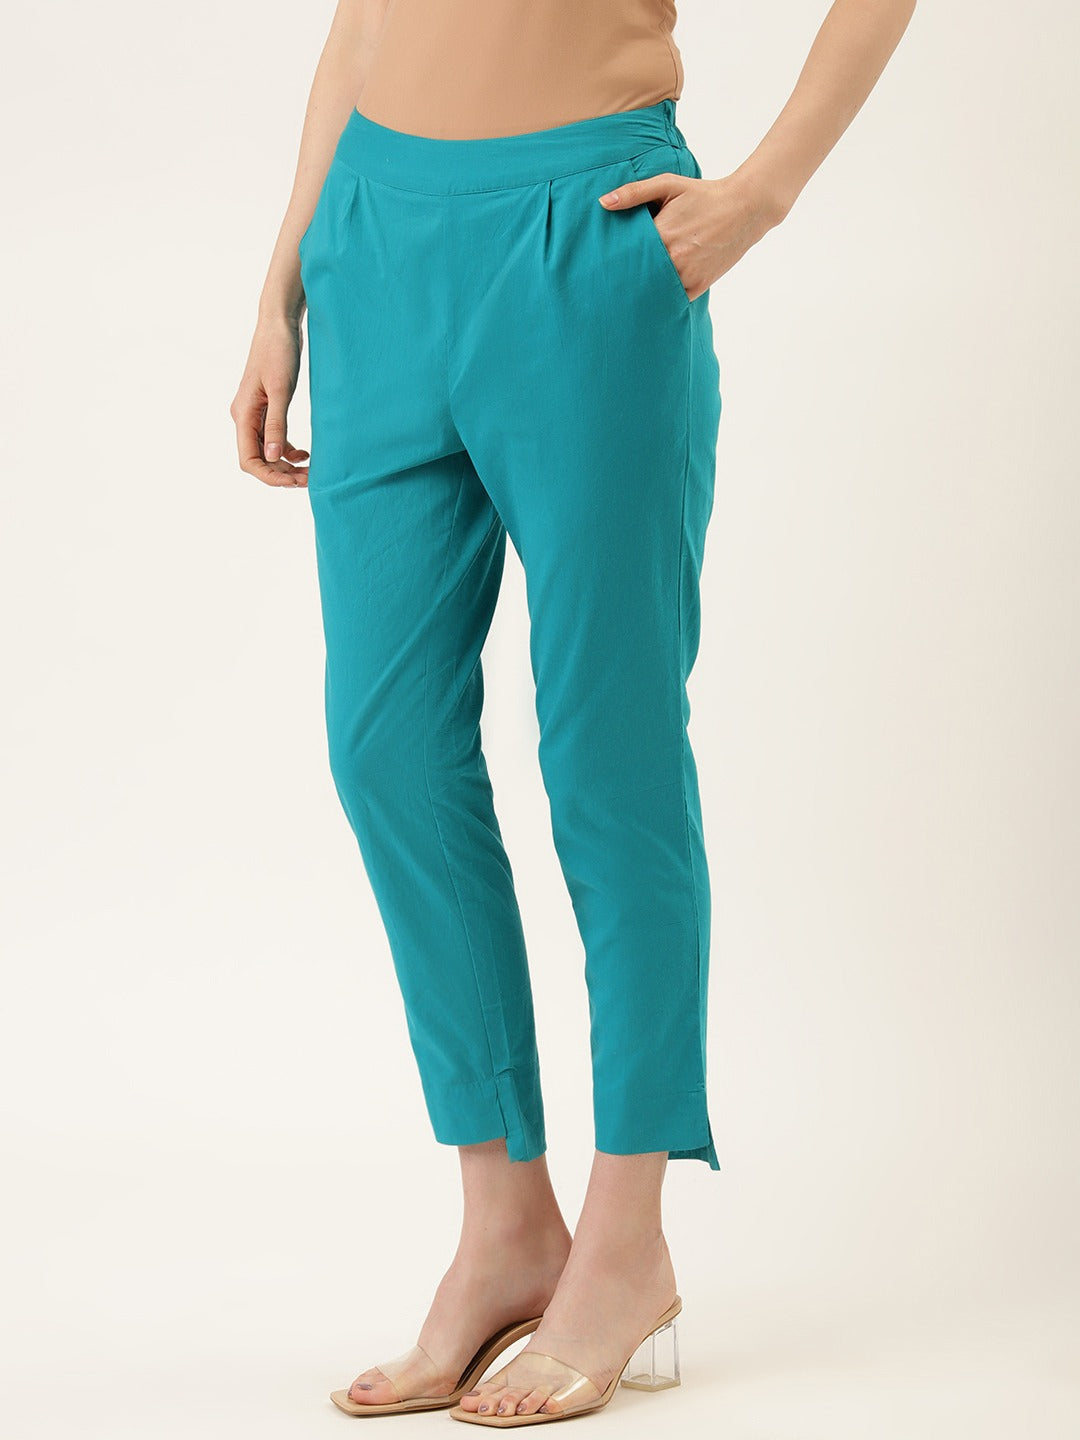 Turquoise Blue Ethnic Wear Cotton Pants